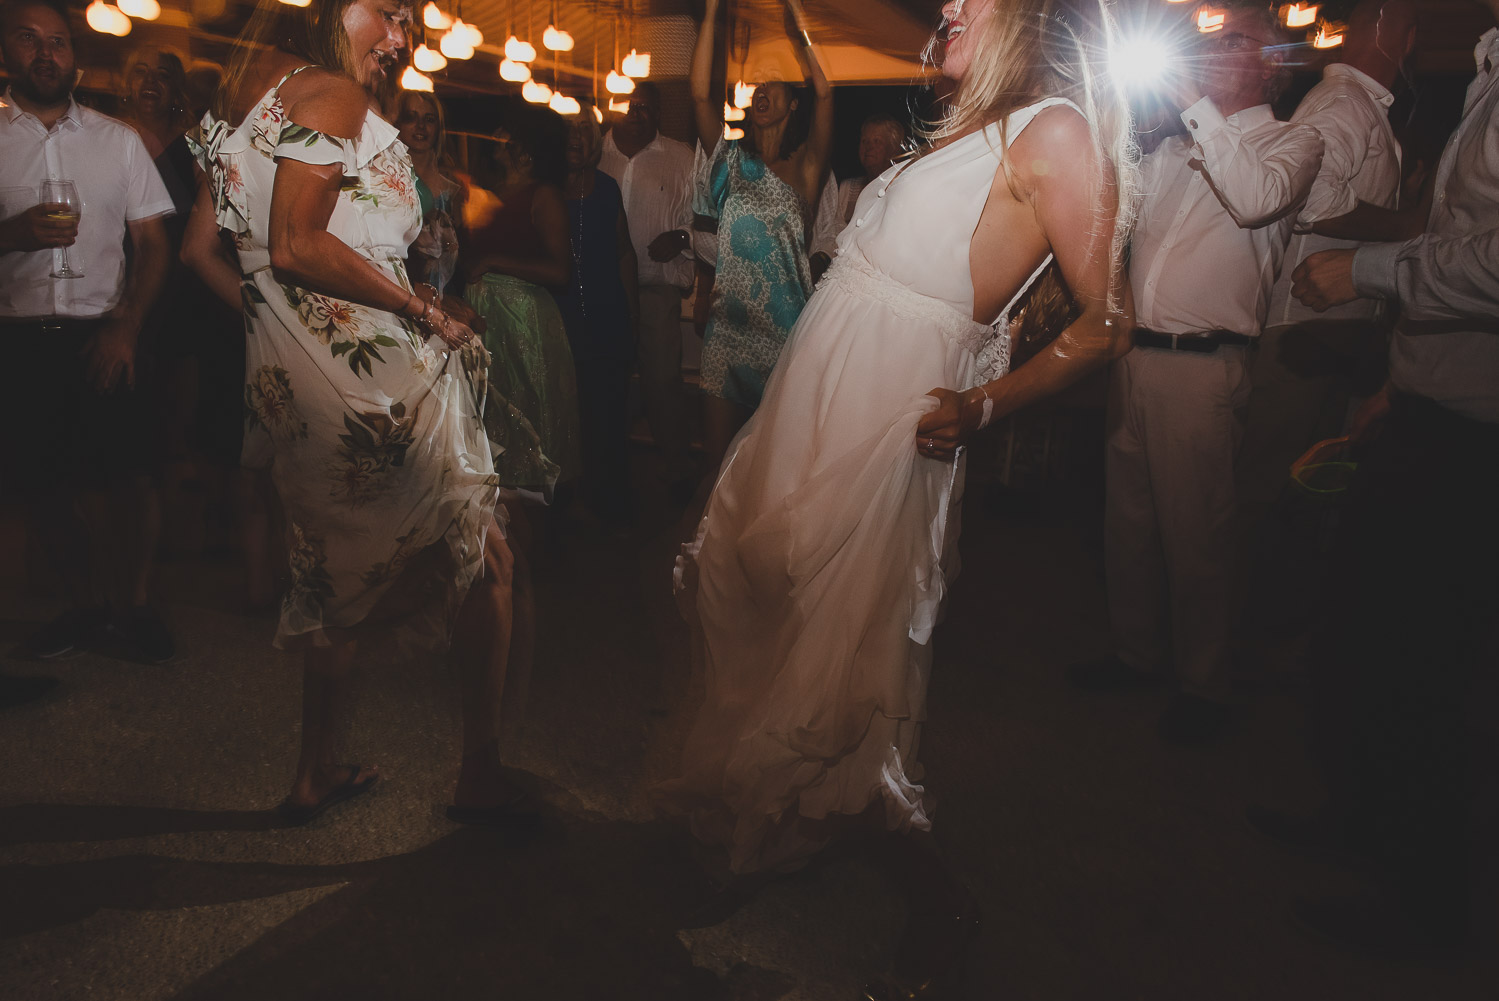 Wedding photographer Mykonos: wild dancing at Elia during Mykonos wedding.